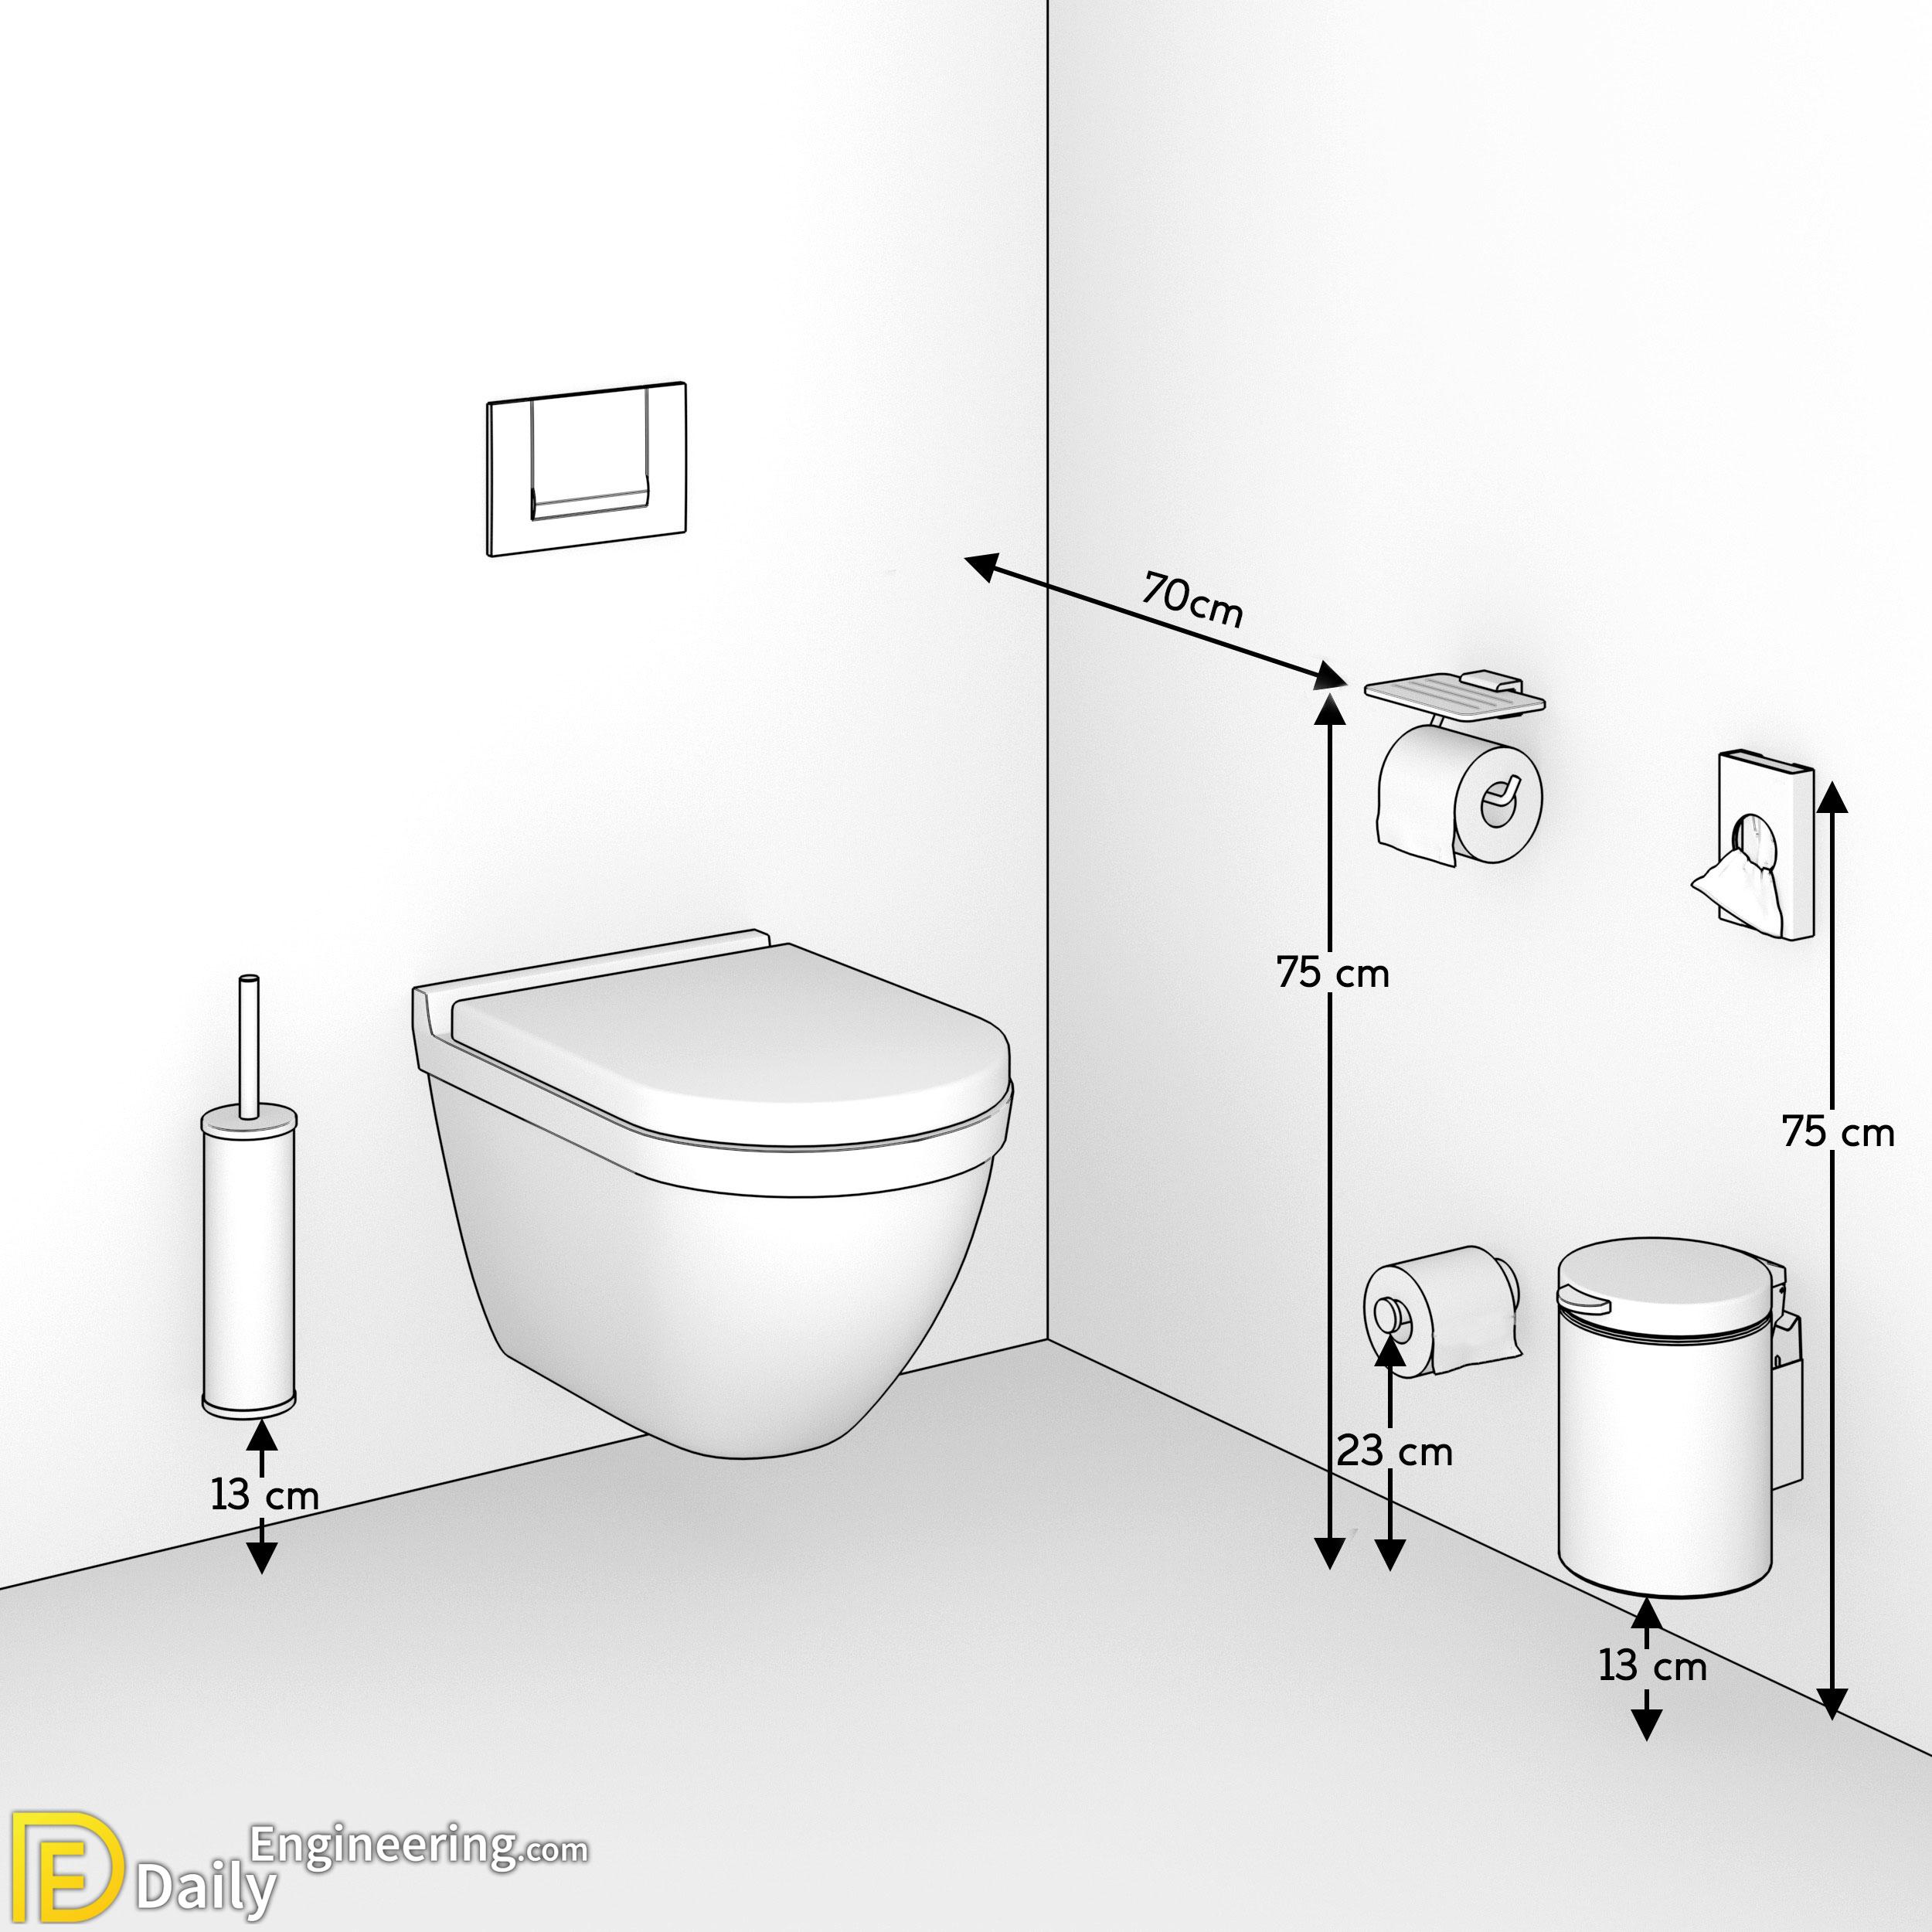 public-bathroom-dimensions-cm-design-talk